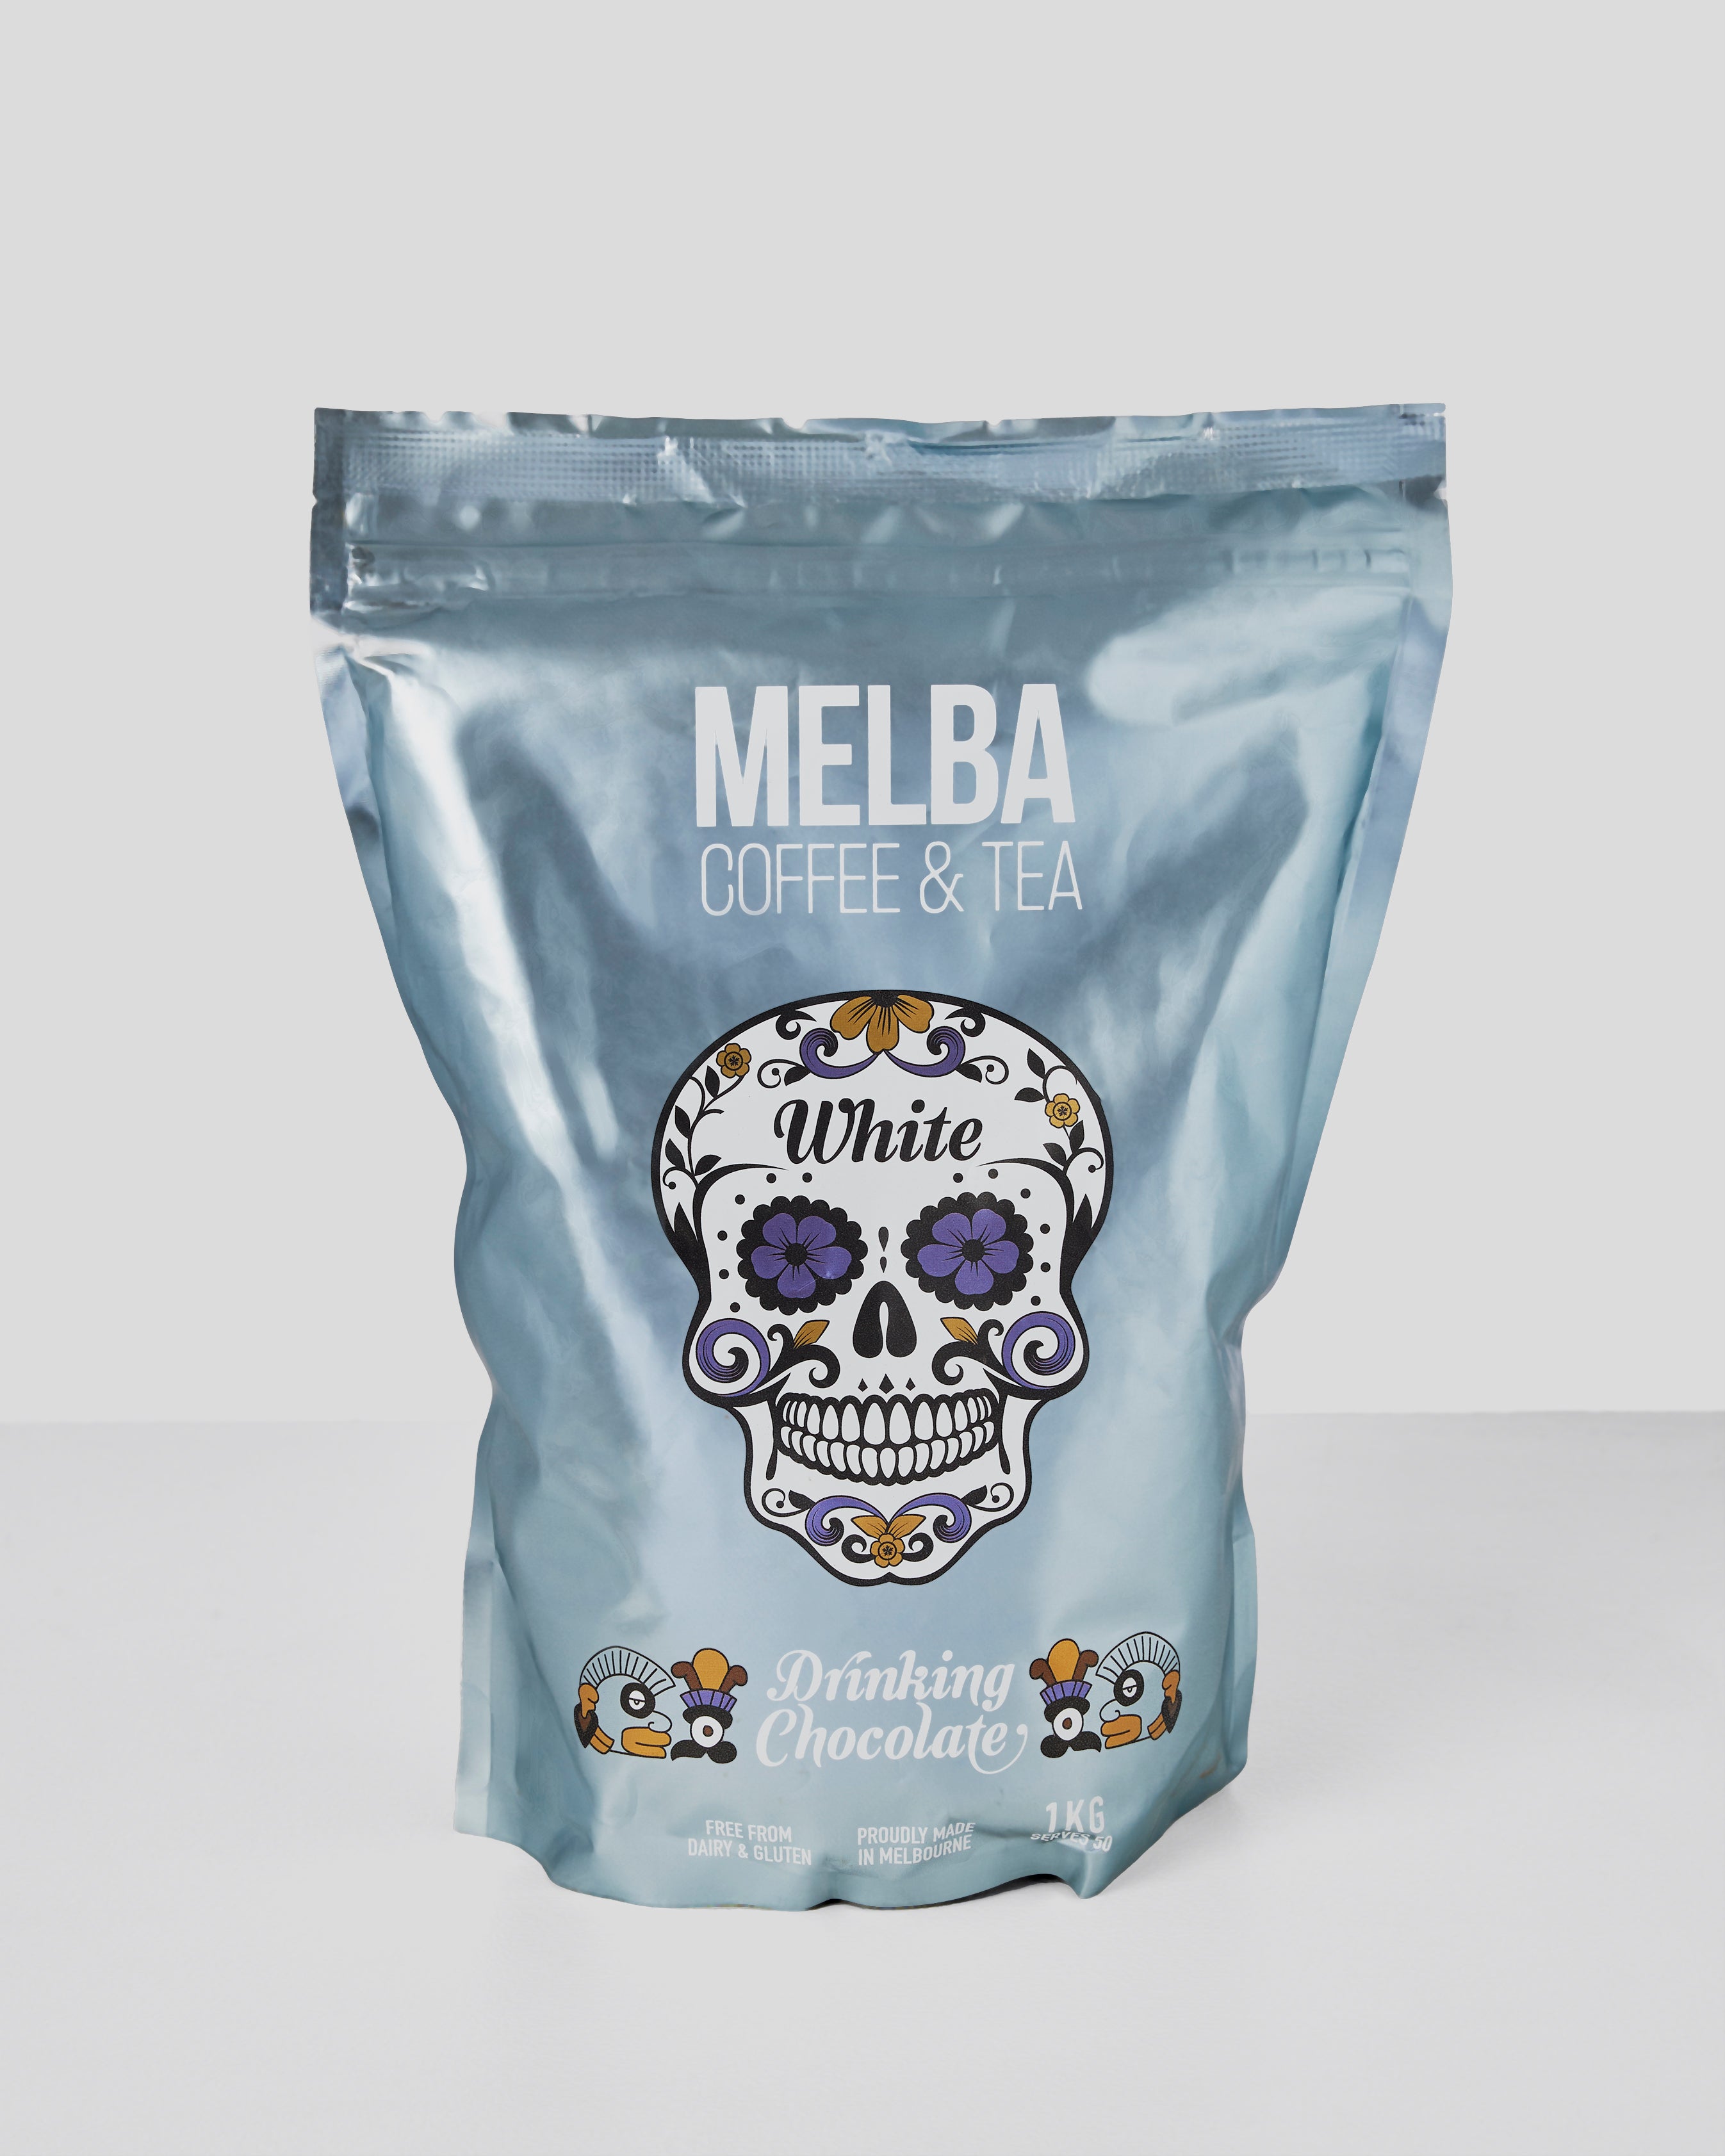 Melba White Drinking Chocolate